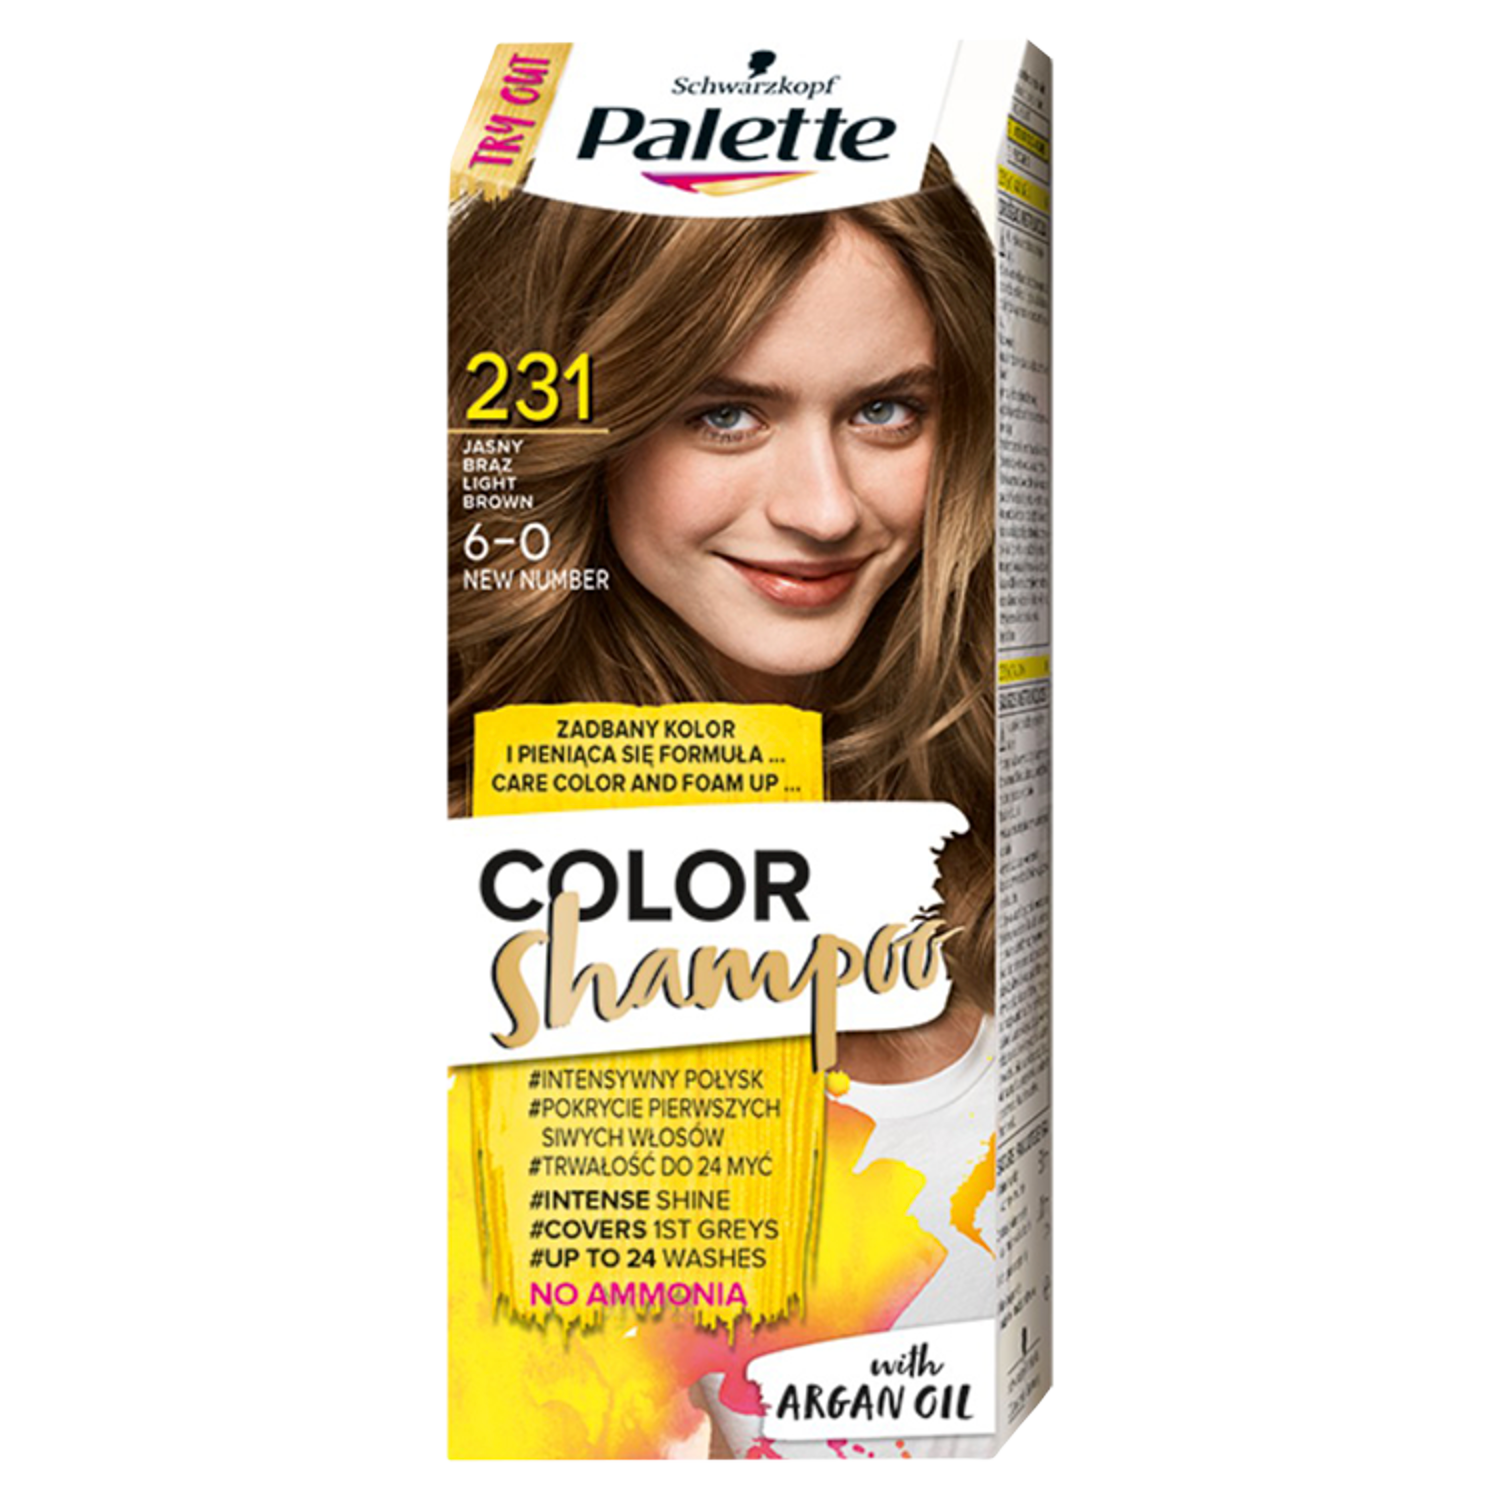 Palette szampon koloryzujący 231 jasny brąz Color Shampoo | hebe.pl